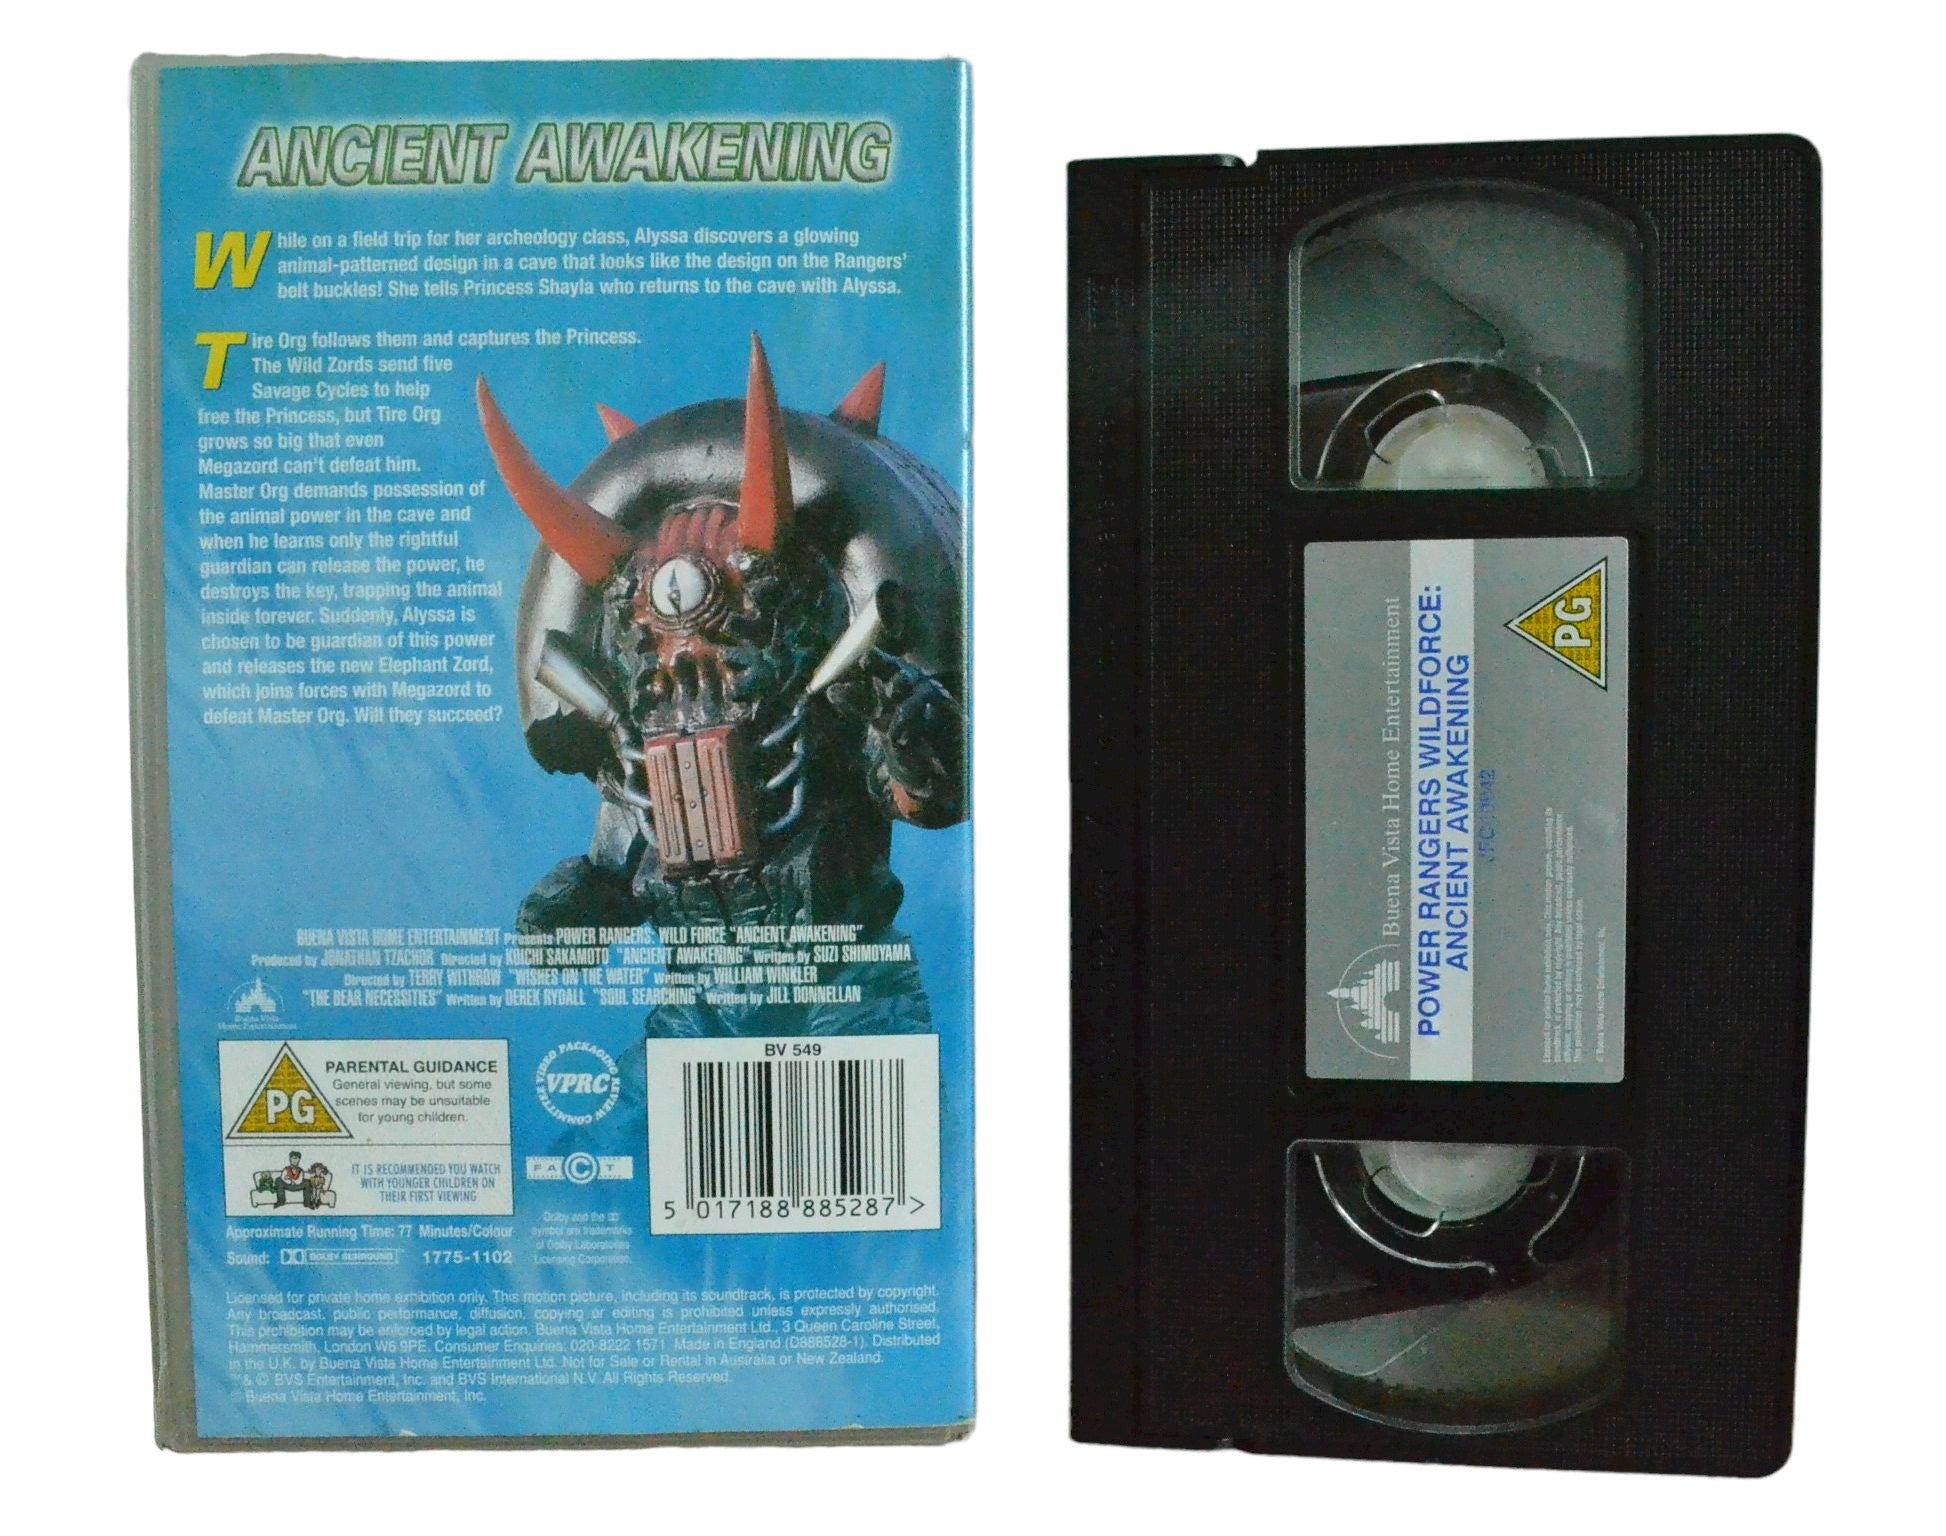 Power Rangers Wild Force - Ancient Awakening - Buena Vista Home Entertainment - Childrens - Pal VHS-